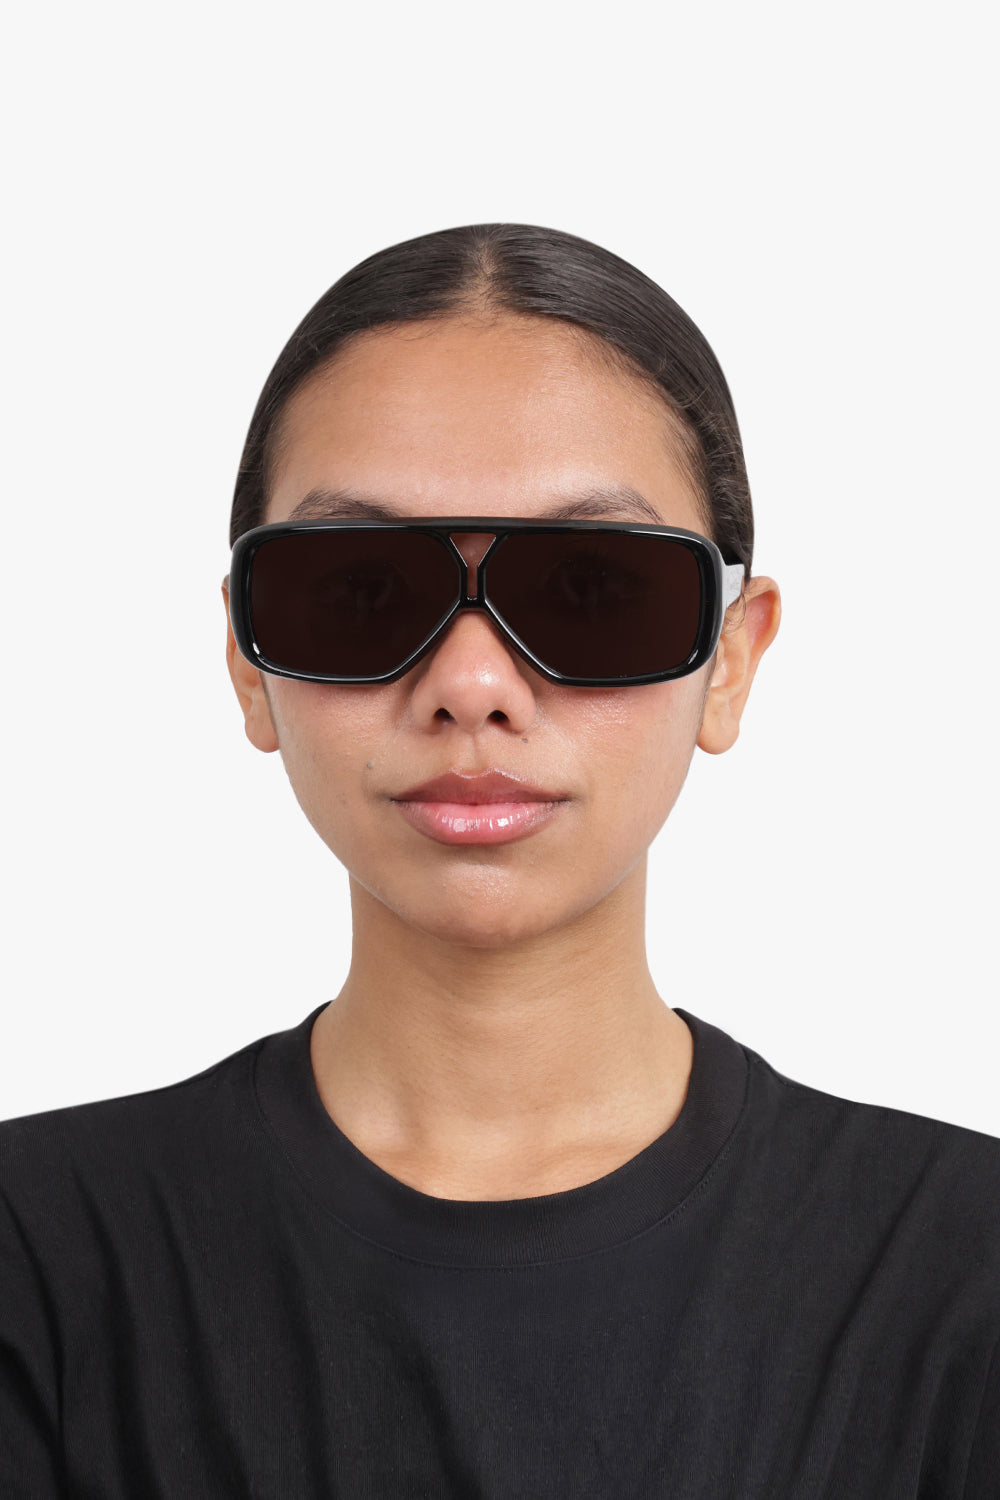 SAINT LAURENT ACCESSORIES BLACK / BLACK Aviator Sunglasses | Black